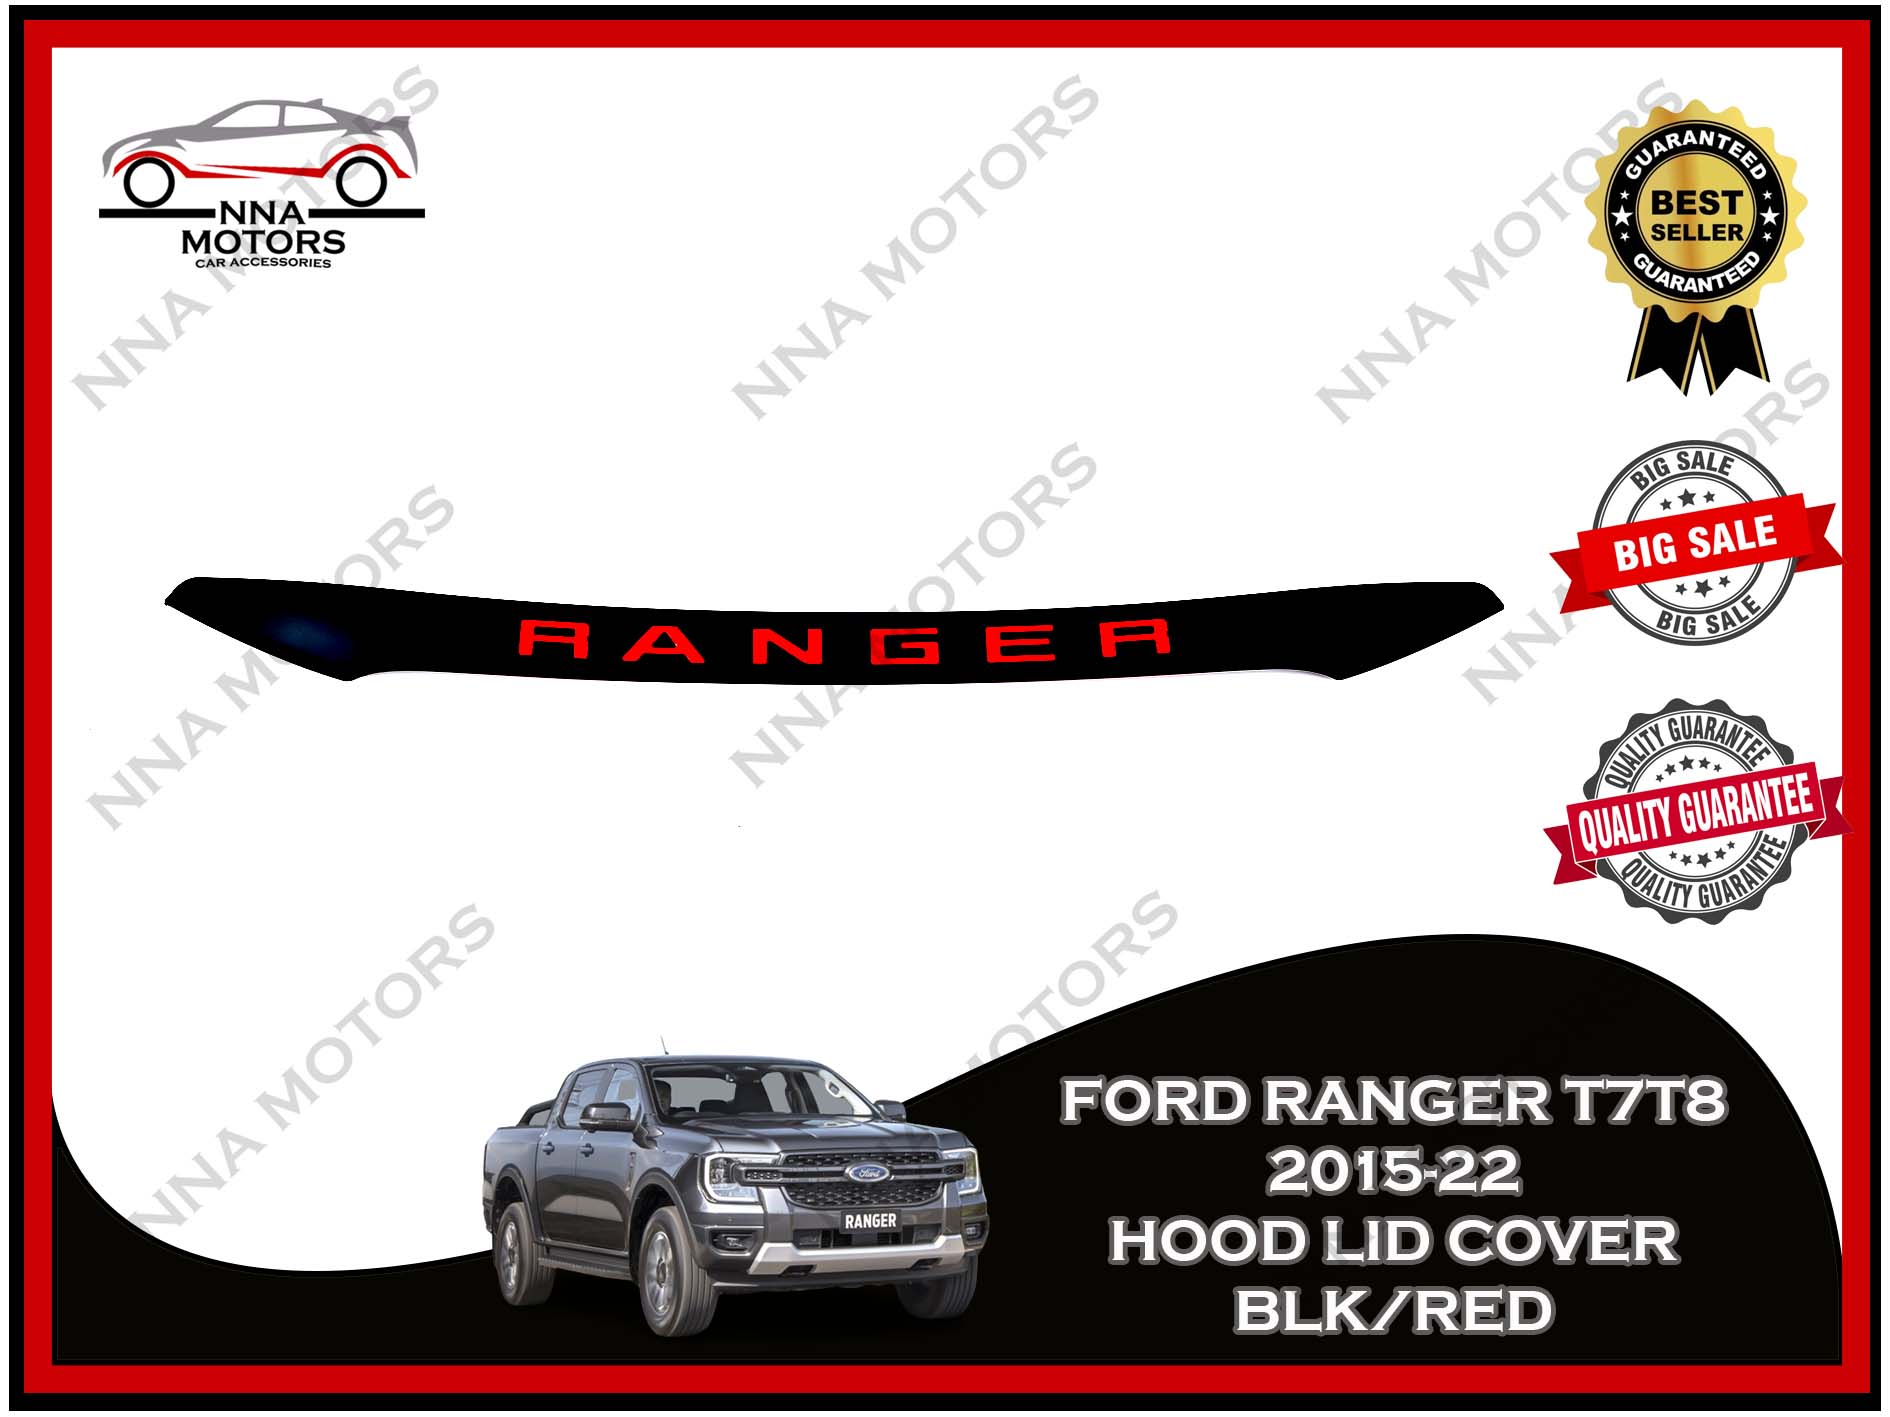 Shop Ford Ranger Hood Guard online